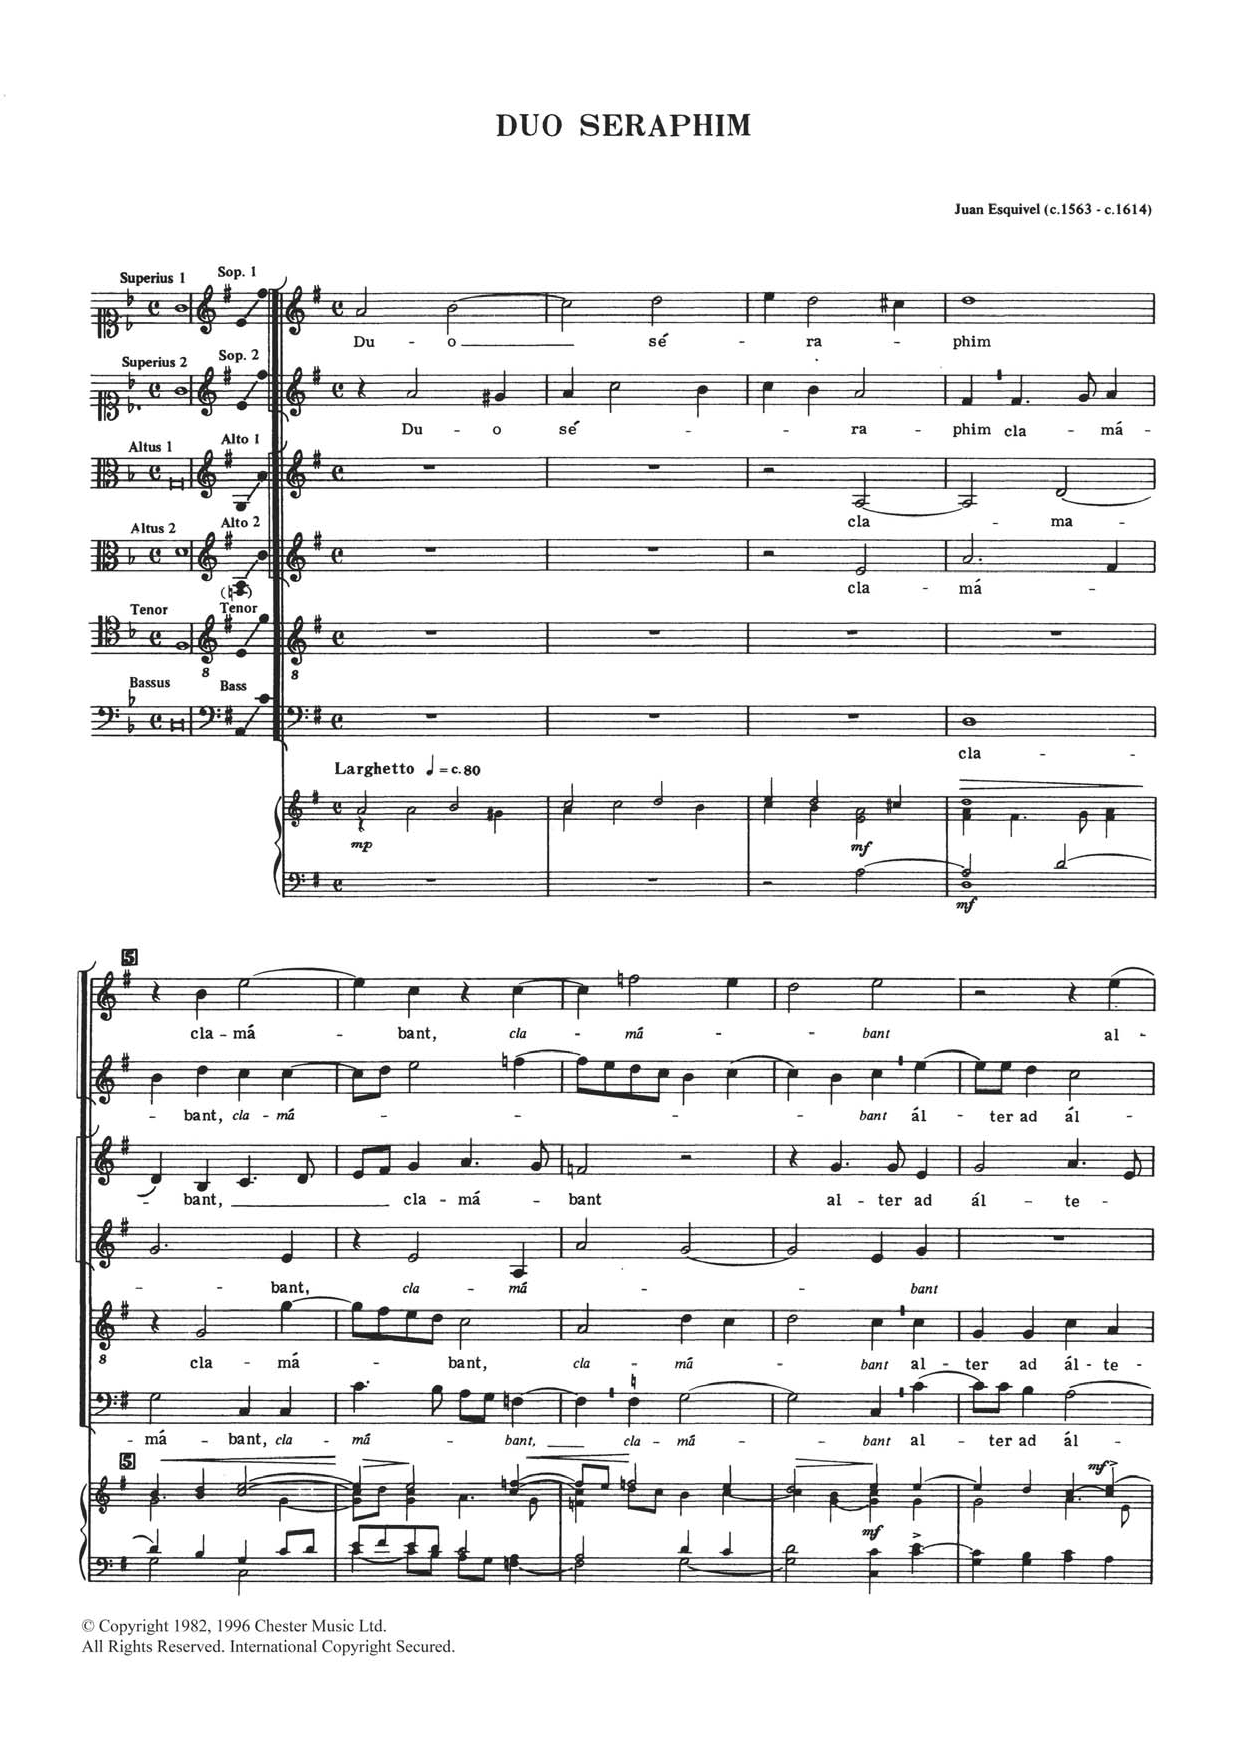 Juan Esquivel Duo Seraphim sheet music notes and chords arranged for SATB Choir